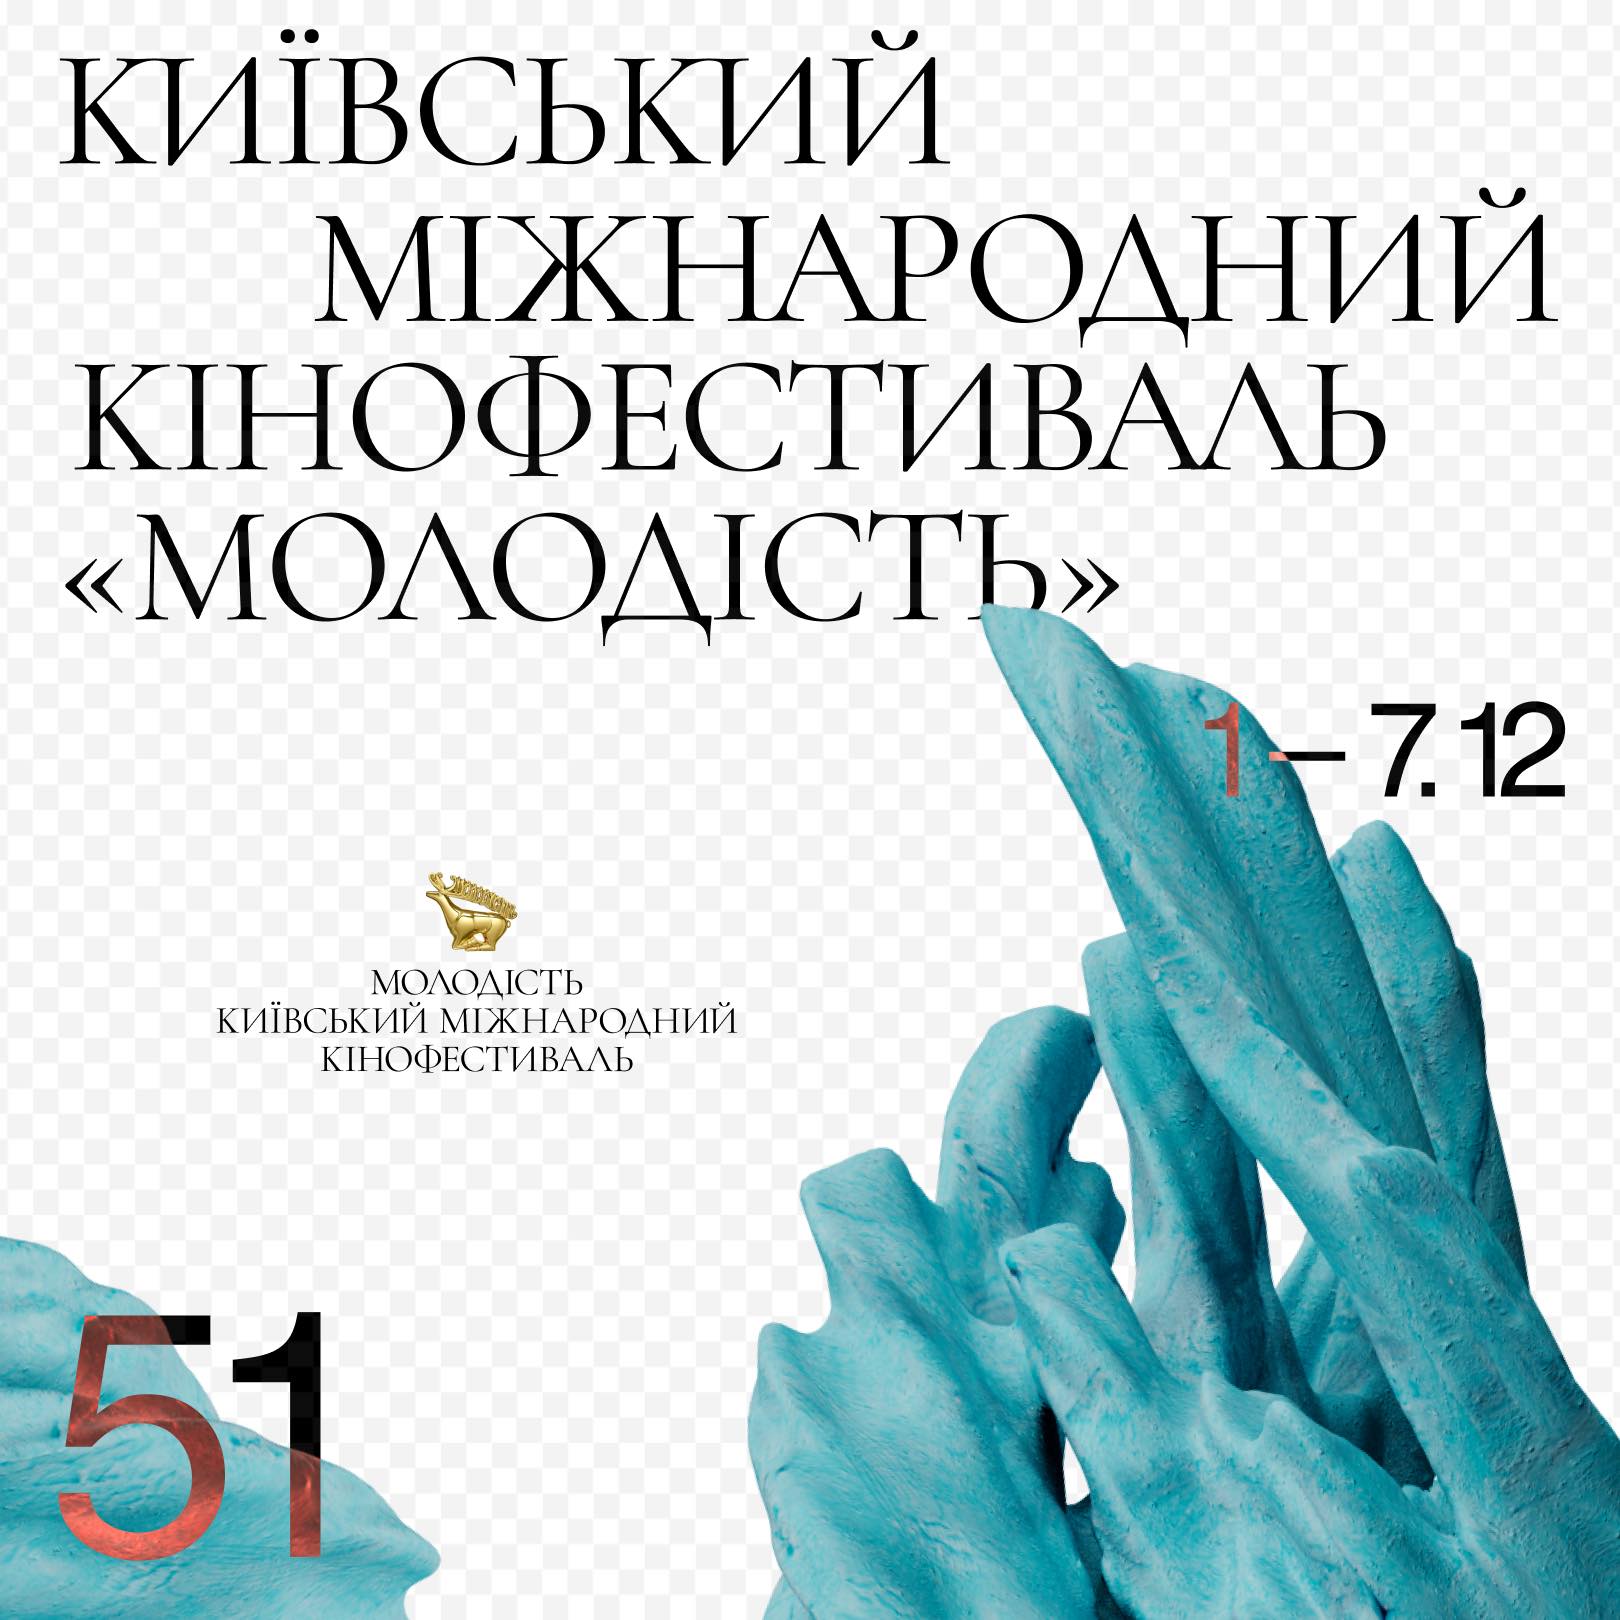 The 51st Molodist Kyiv International Film Festival